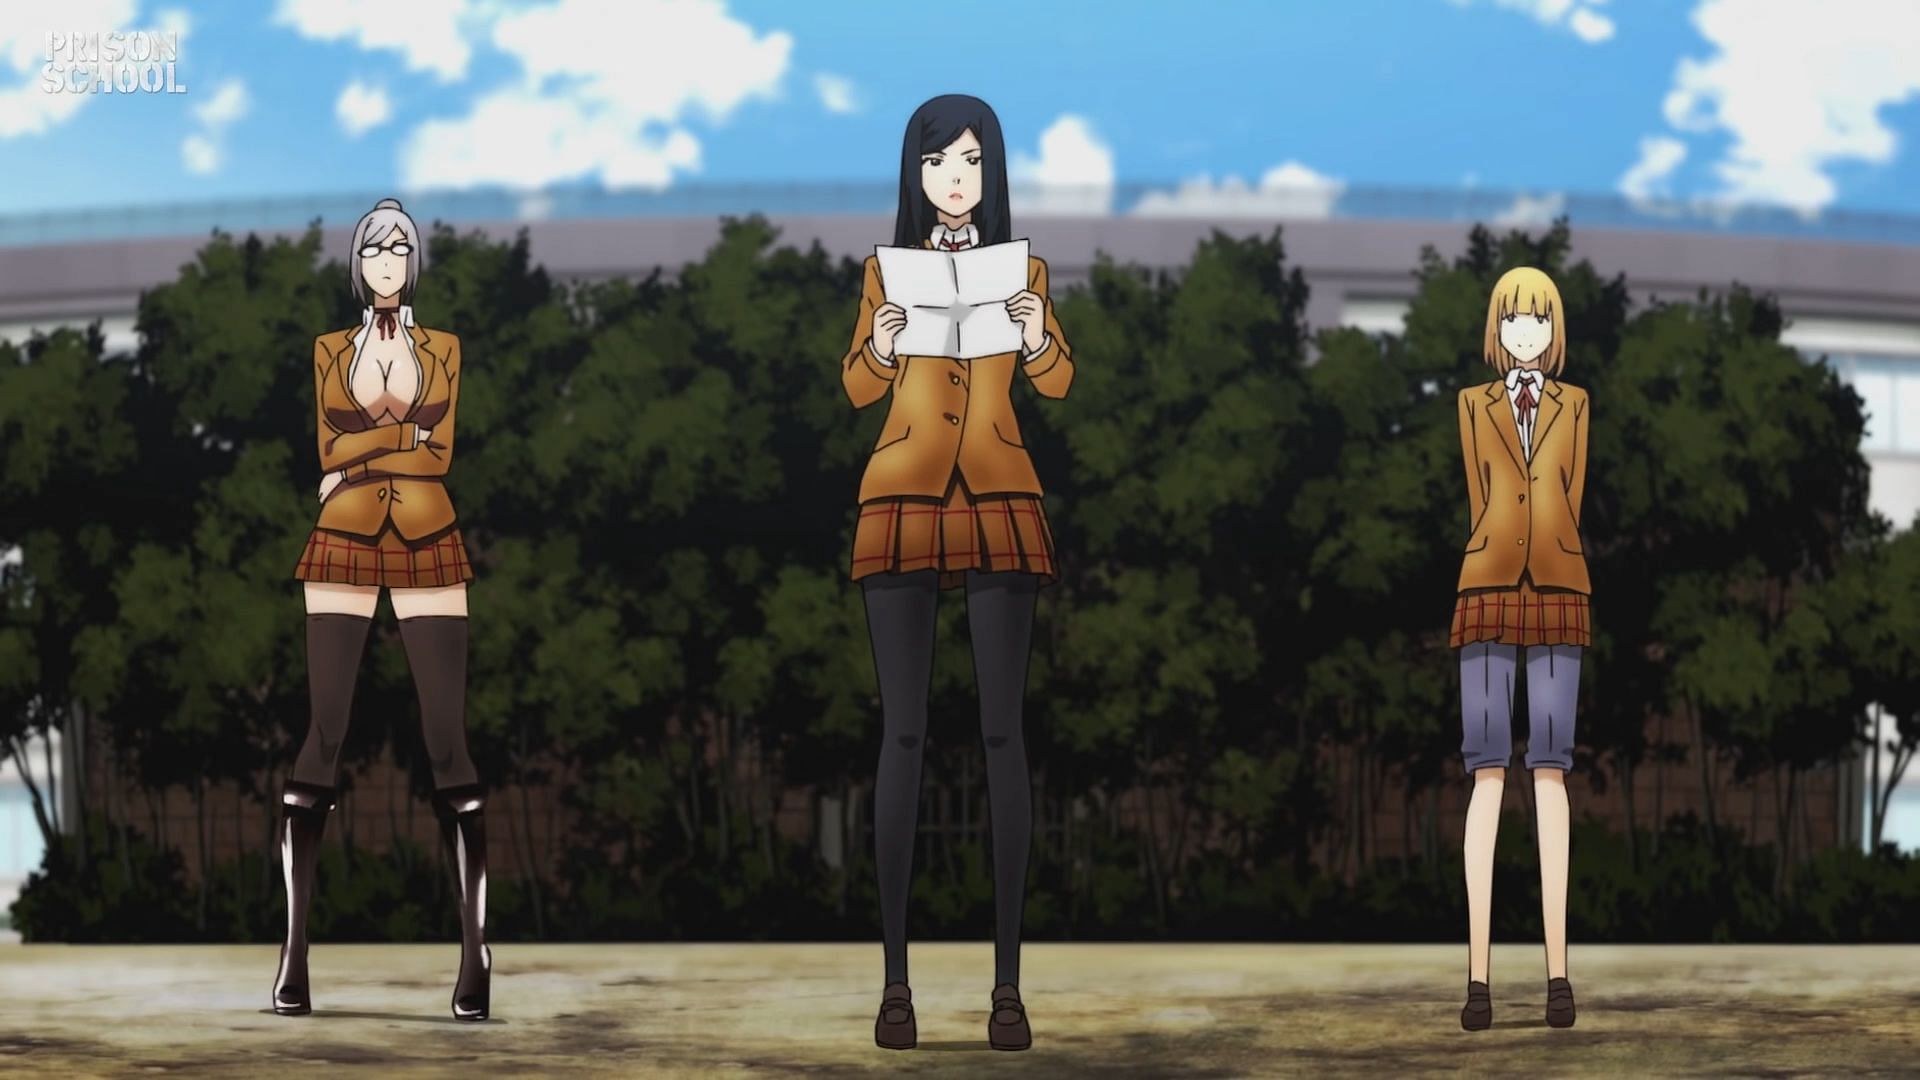 Prison School anime still (Image via J.C. Staff)